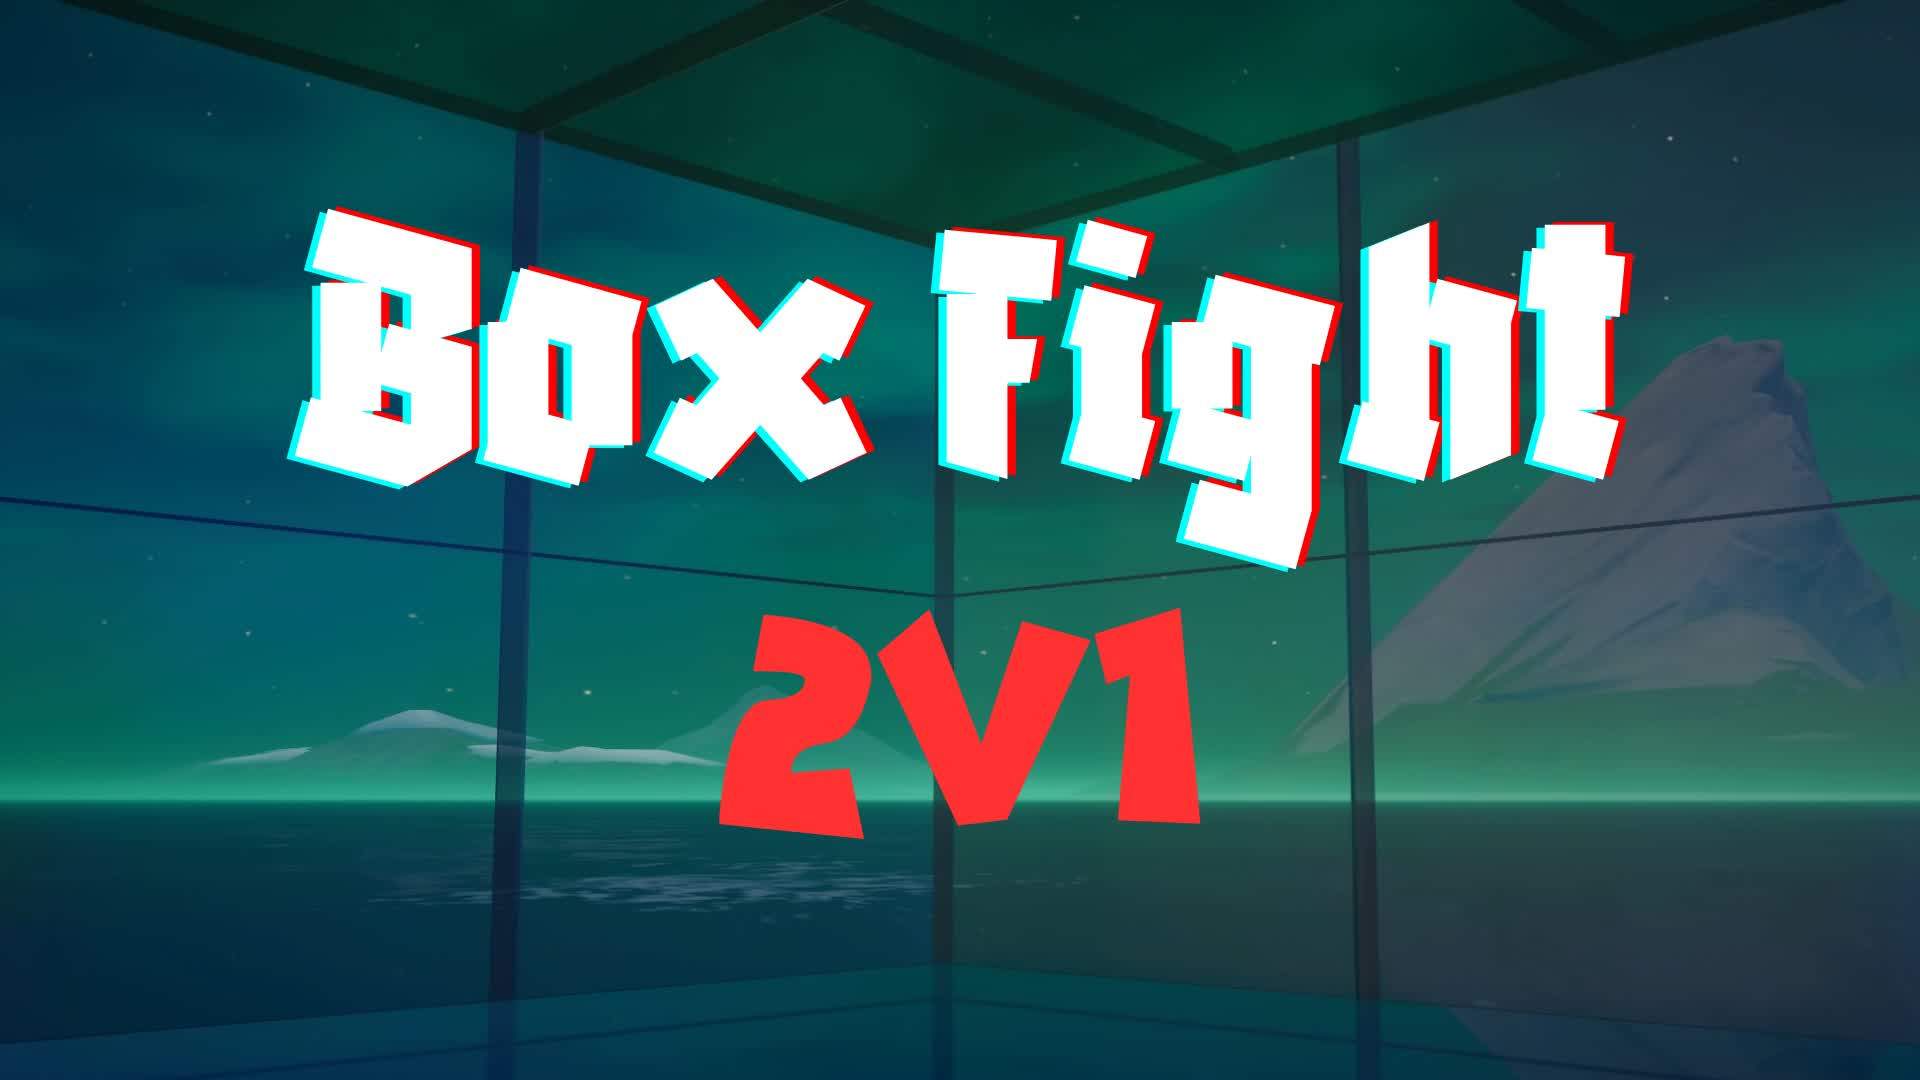 BOX FIGHT 2v1